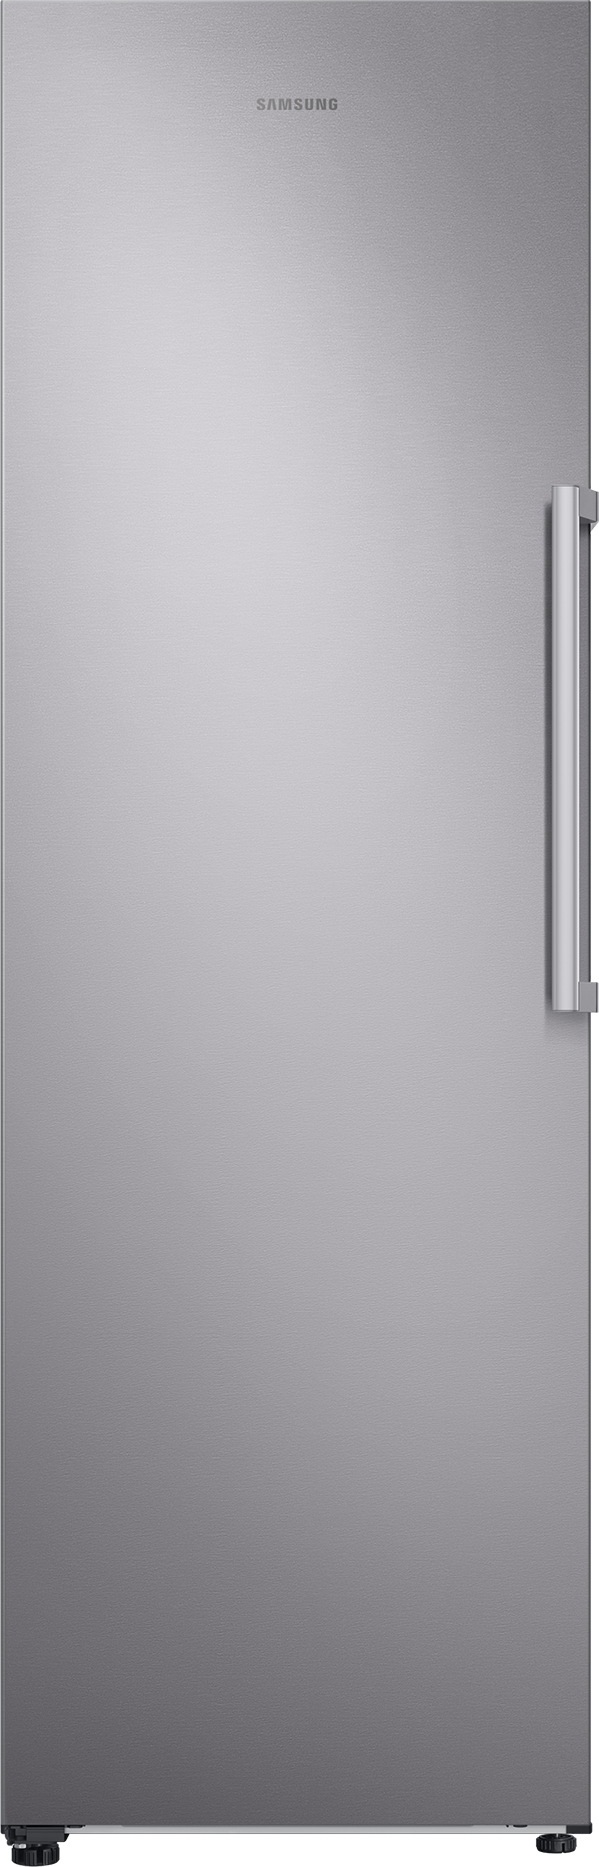 SAMSUNG RZ32M7005SA - Congélateur armoire